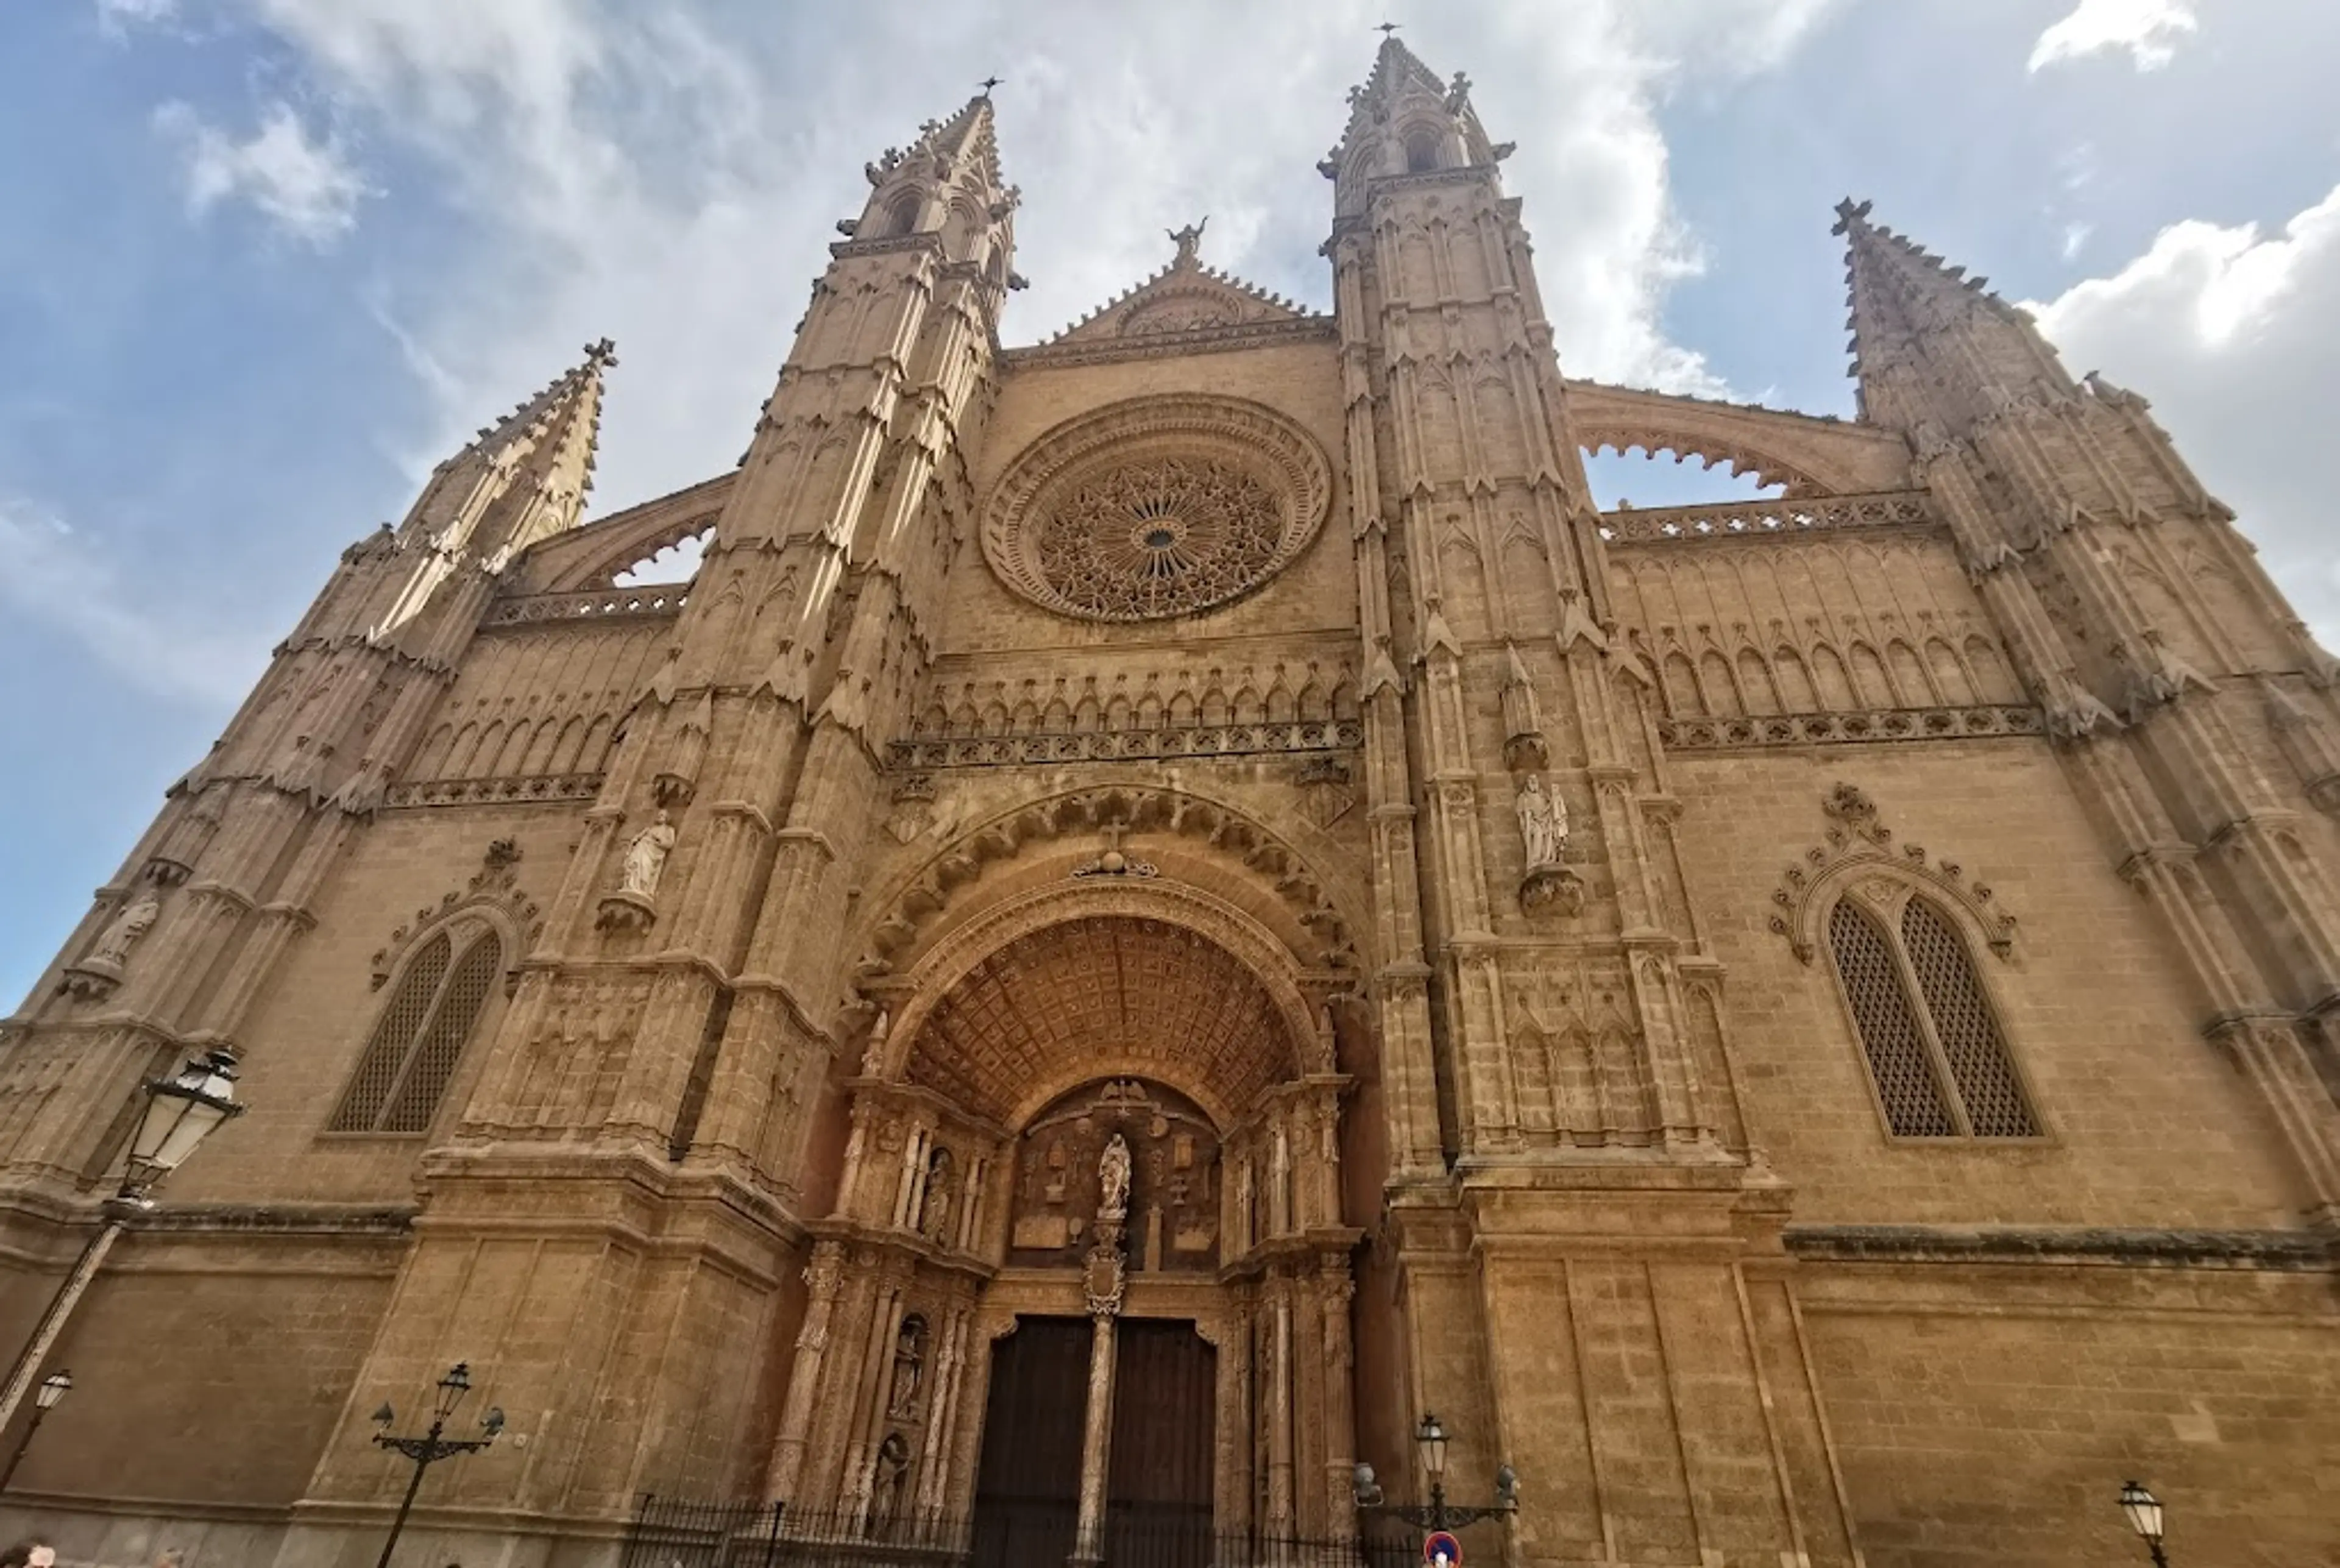 Majorca Cathedral